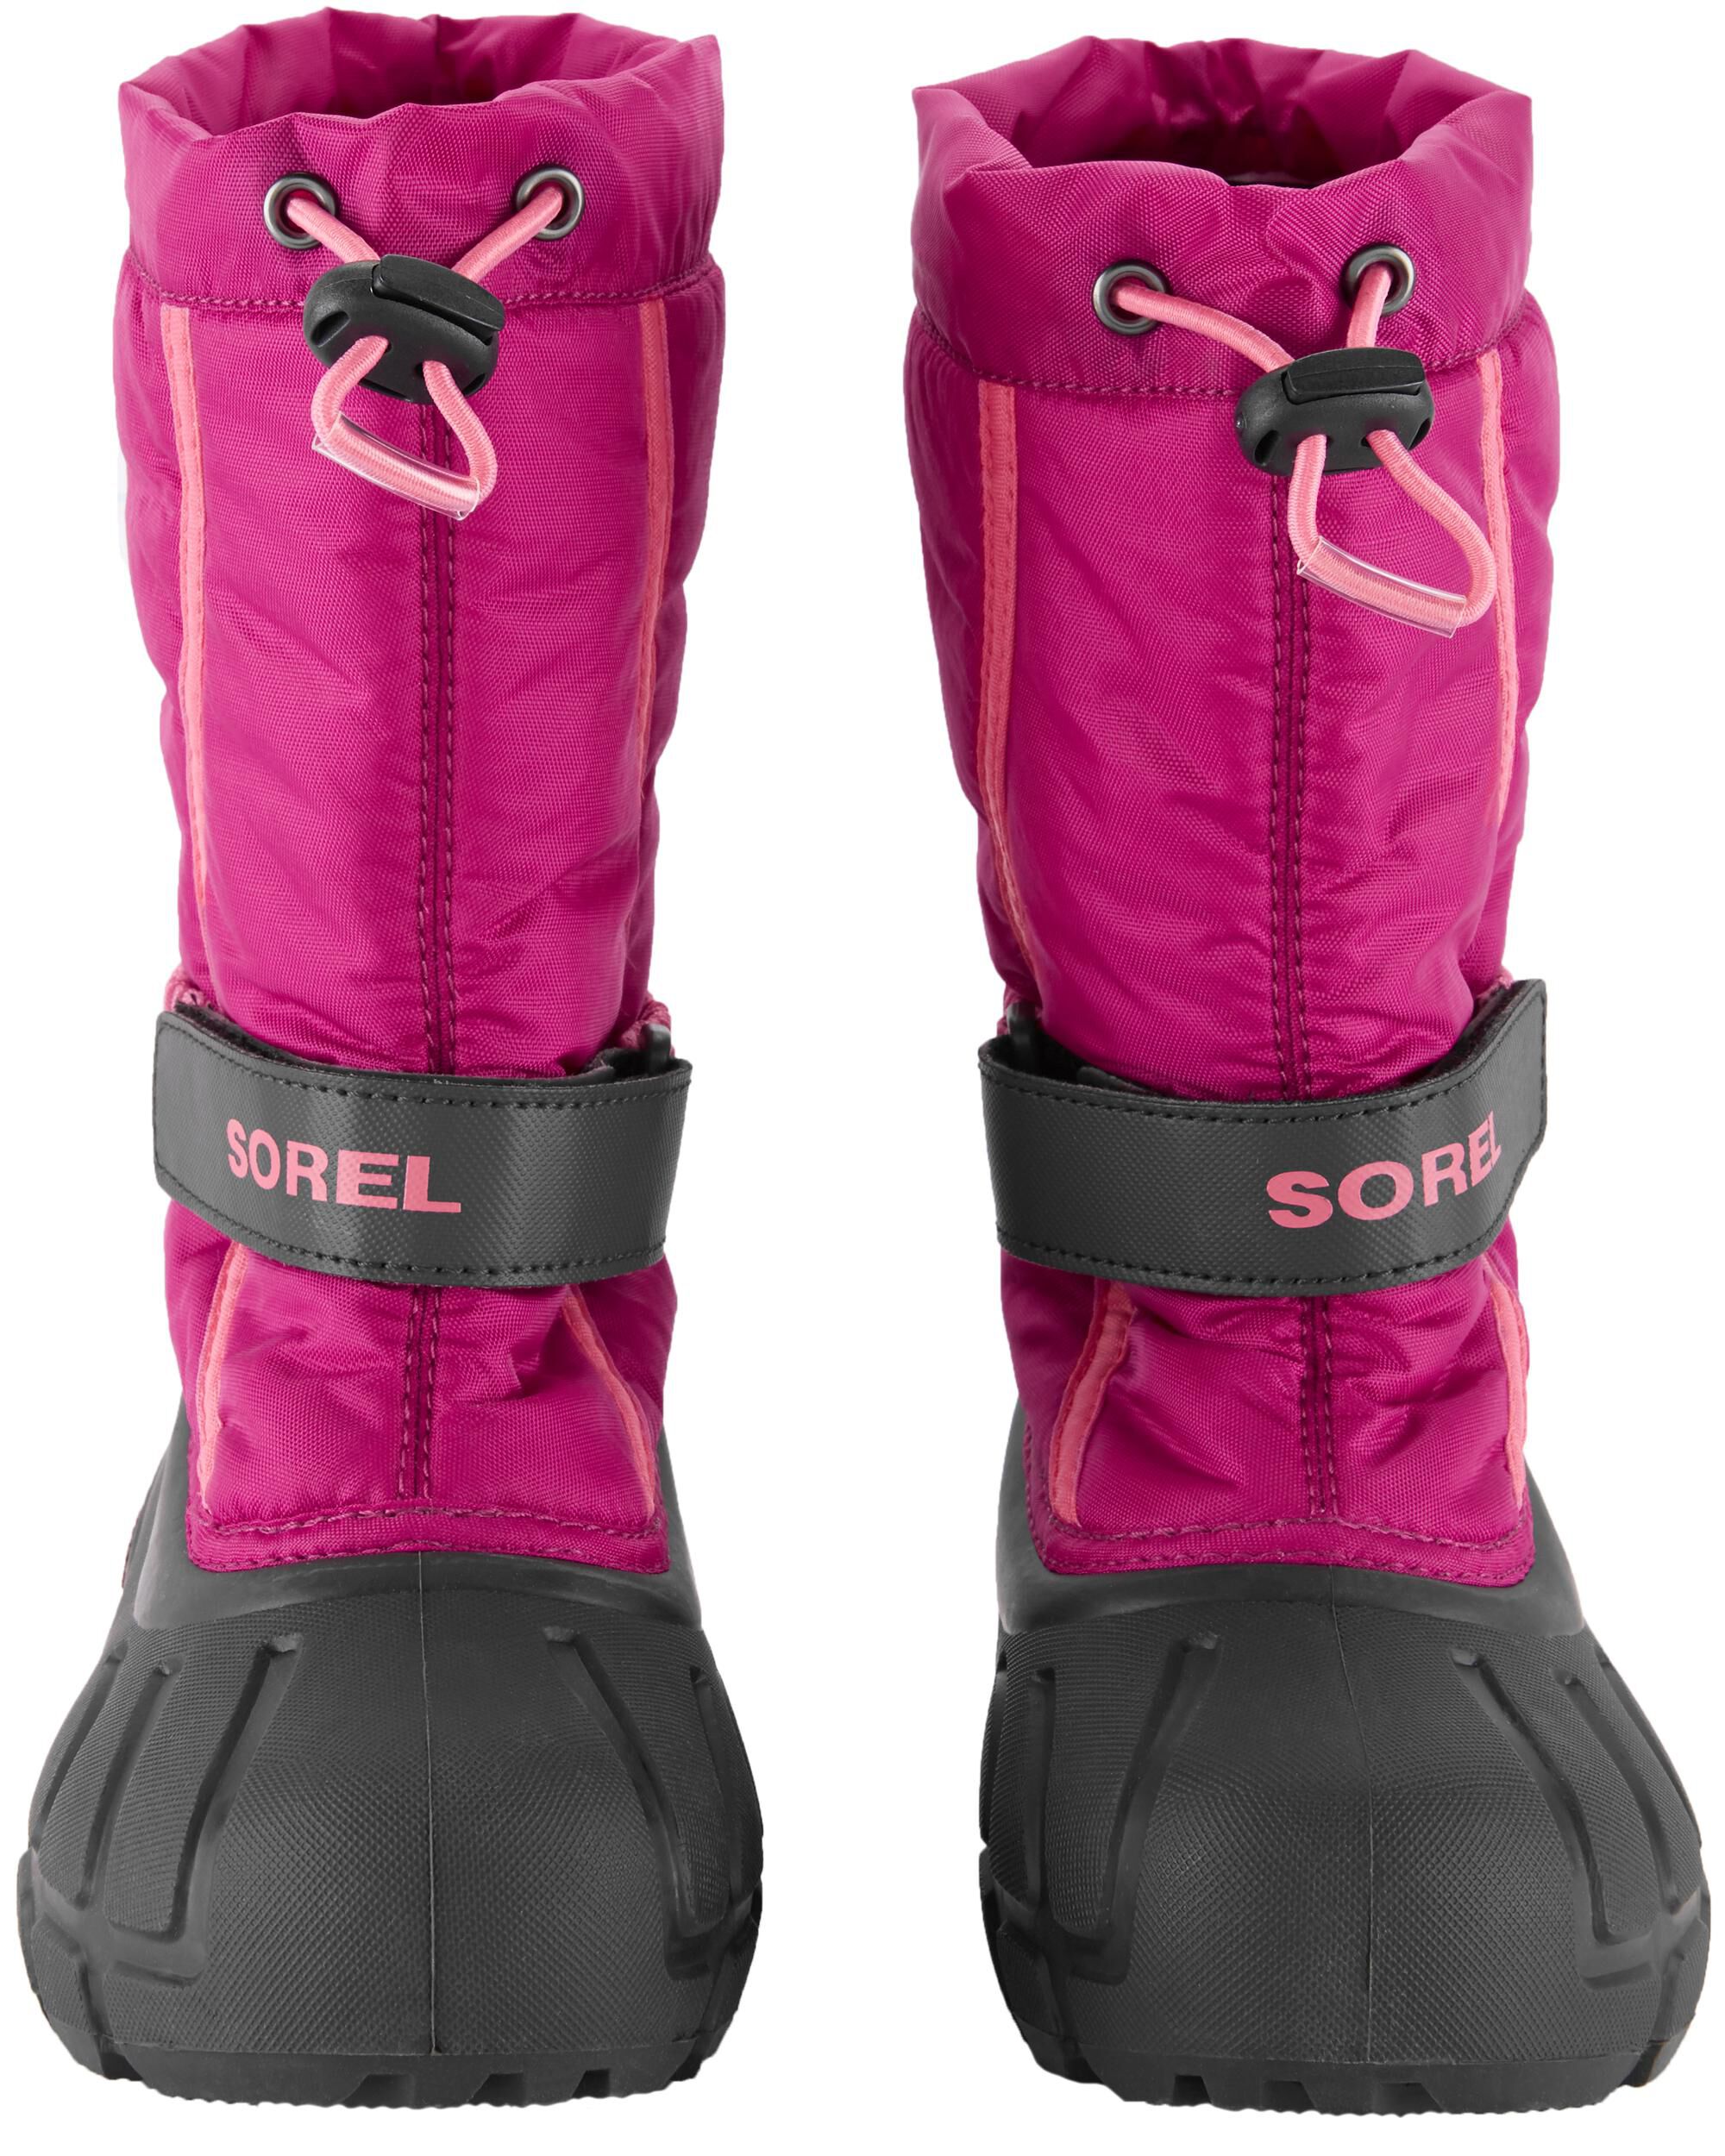 Sorel Youth Flurry Winter Snow Boot